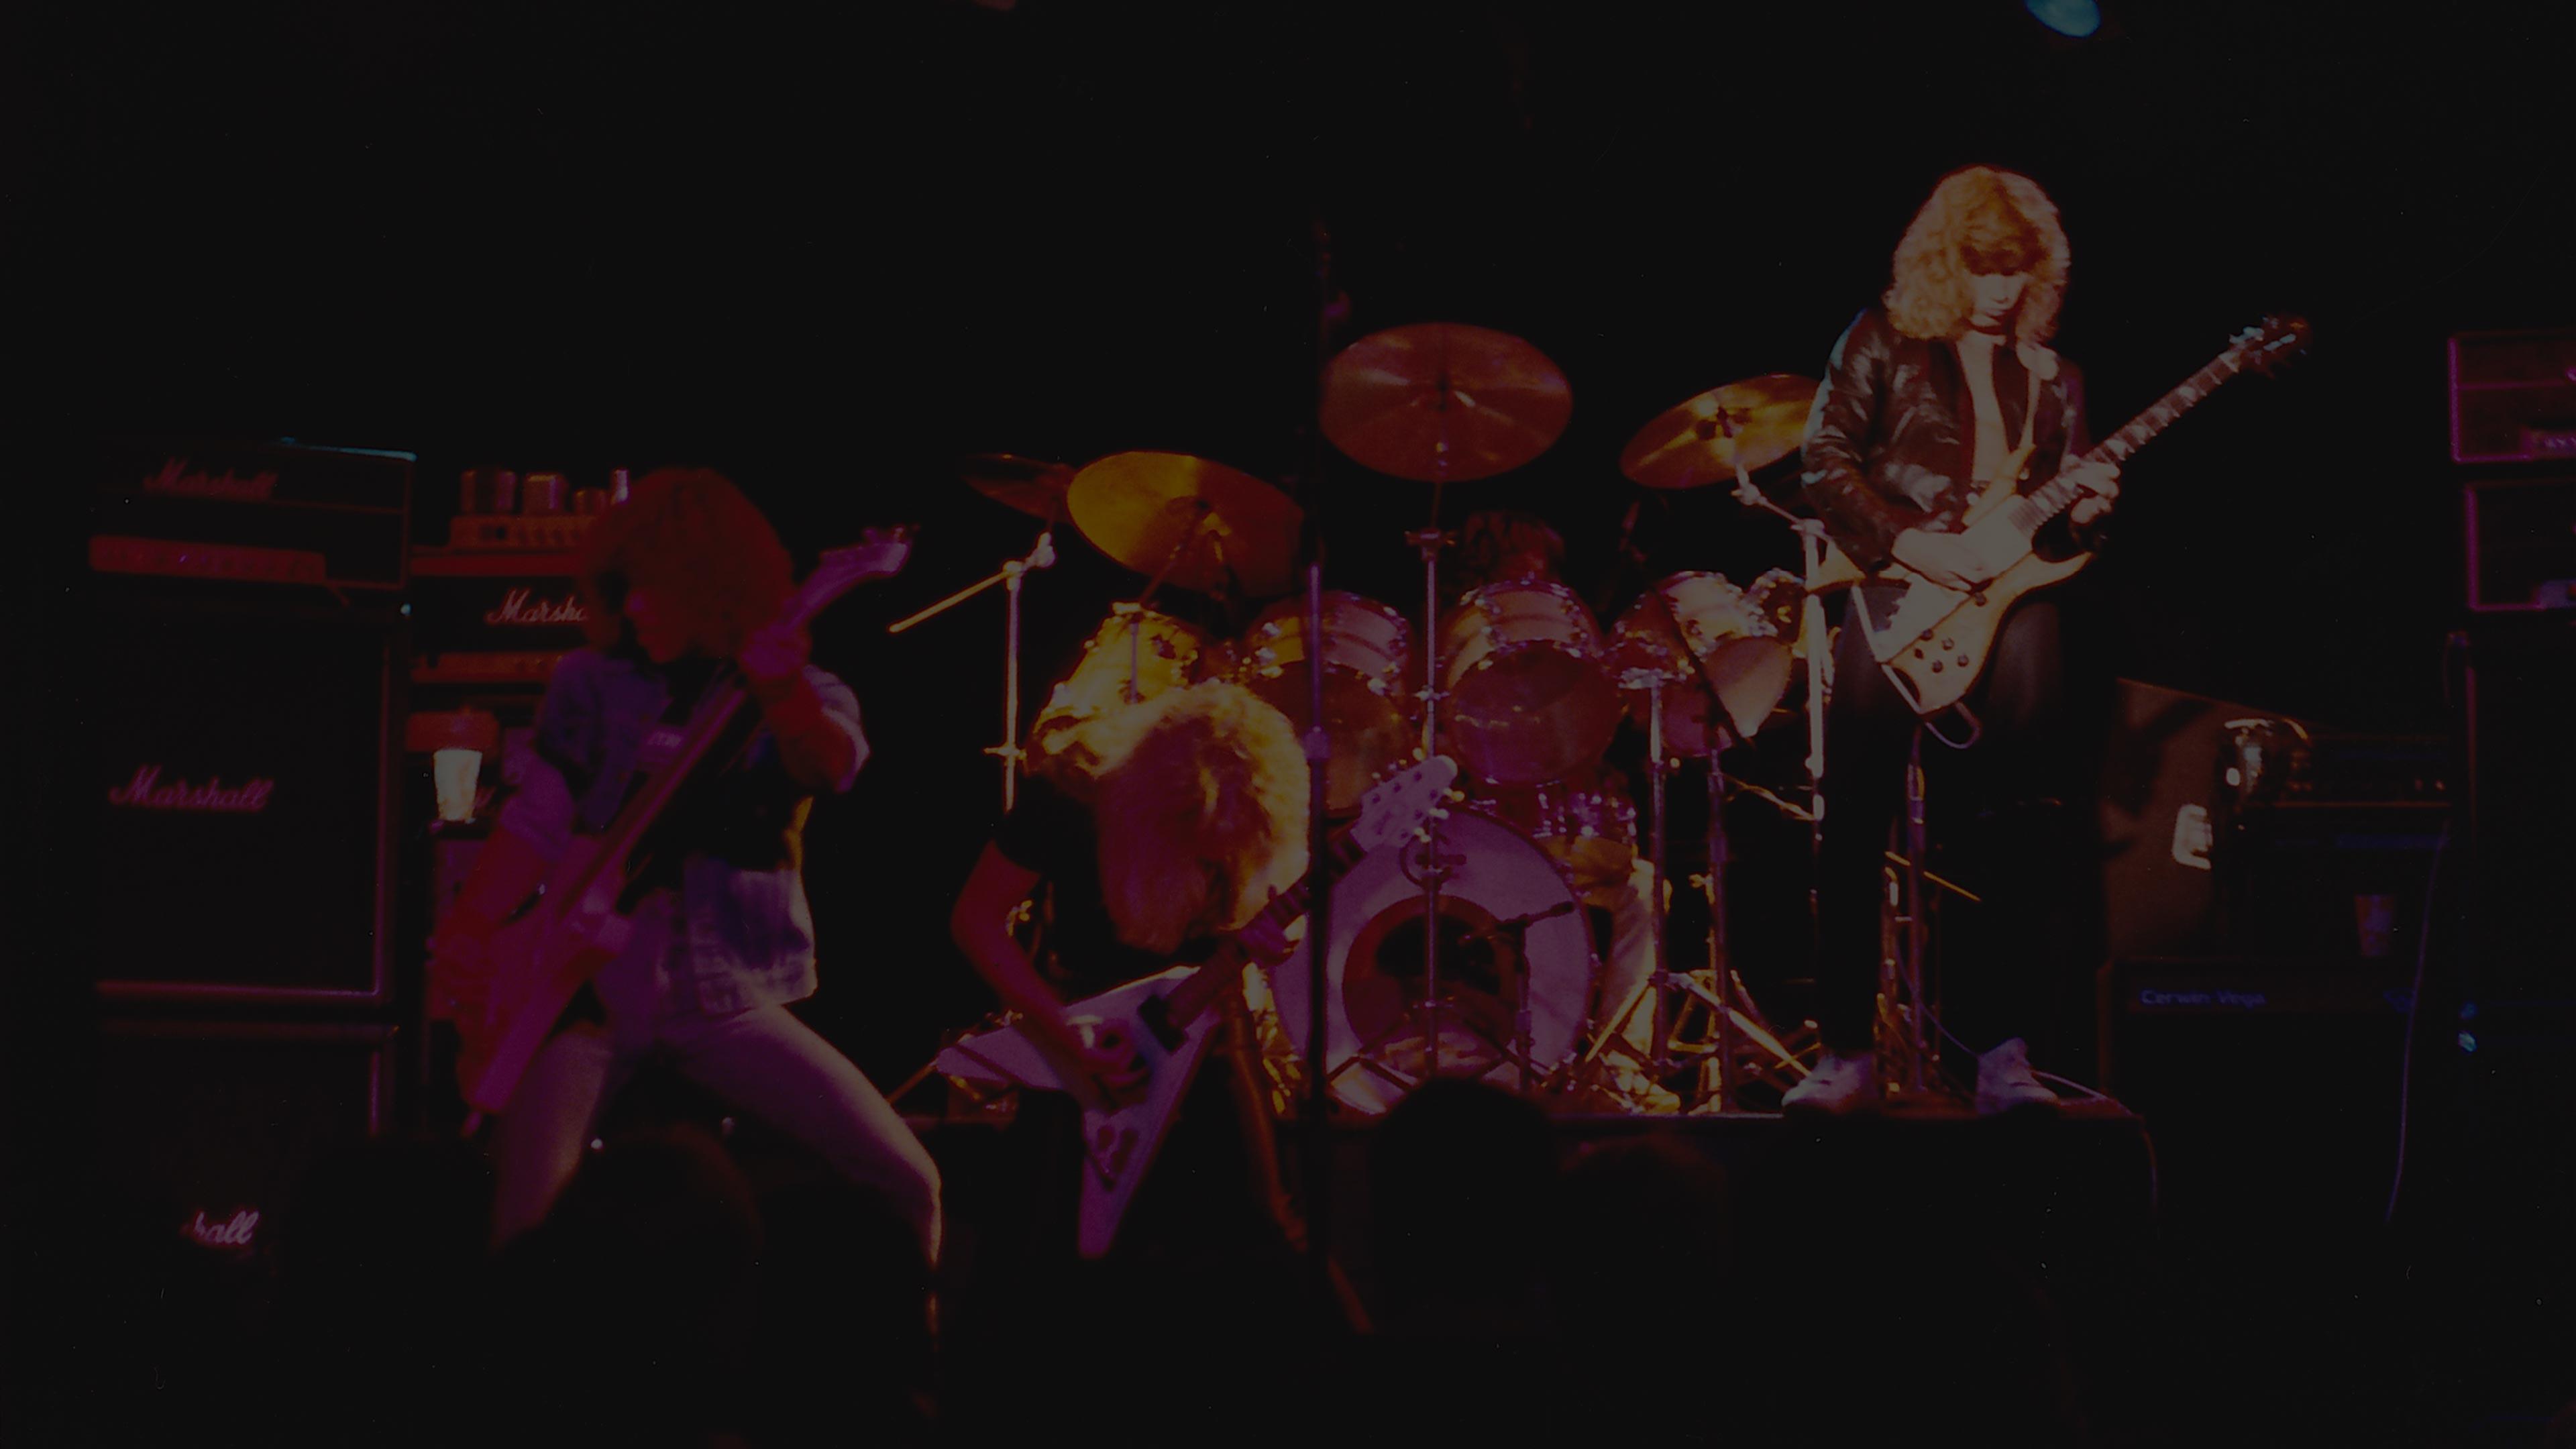 Metallica at The Concert Factory in Costa Mesa, CA on June 26, 1982